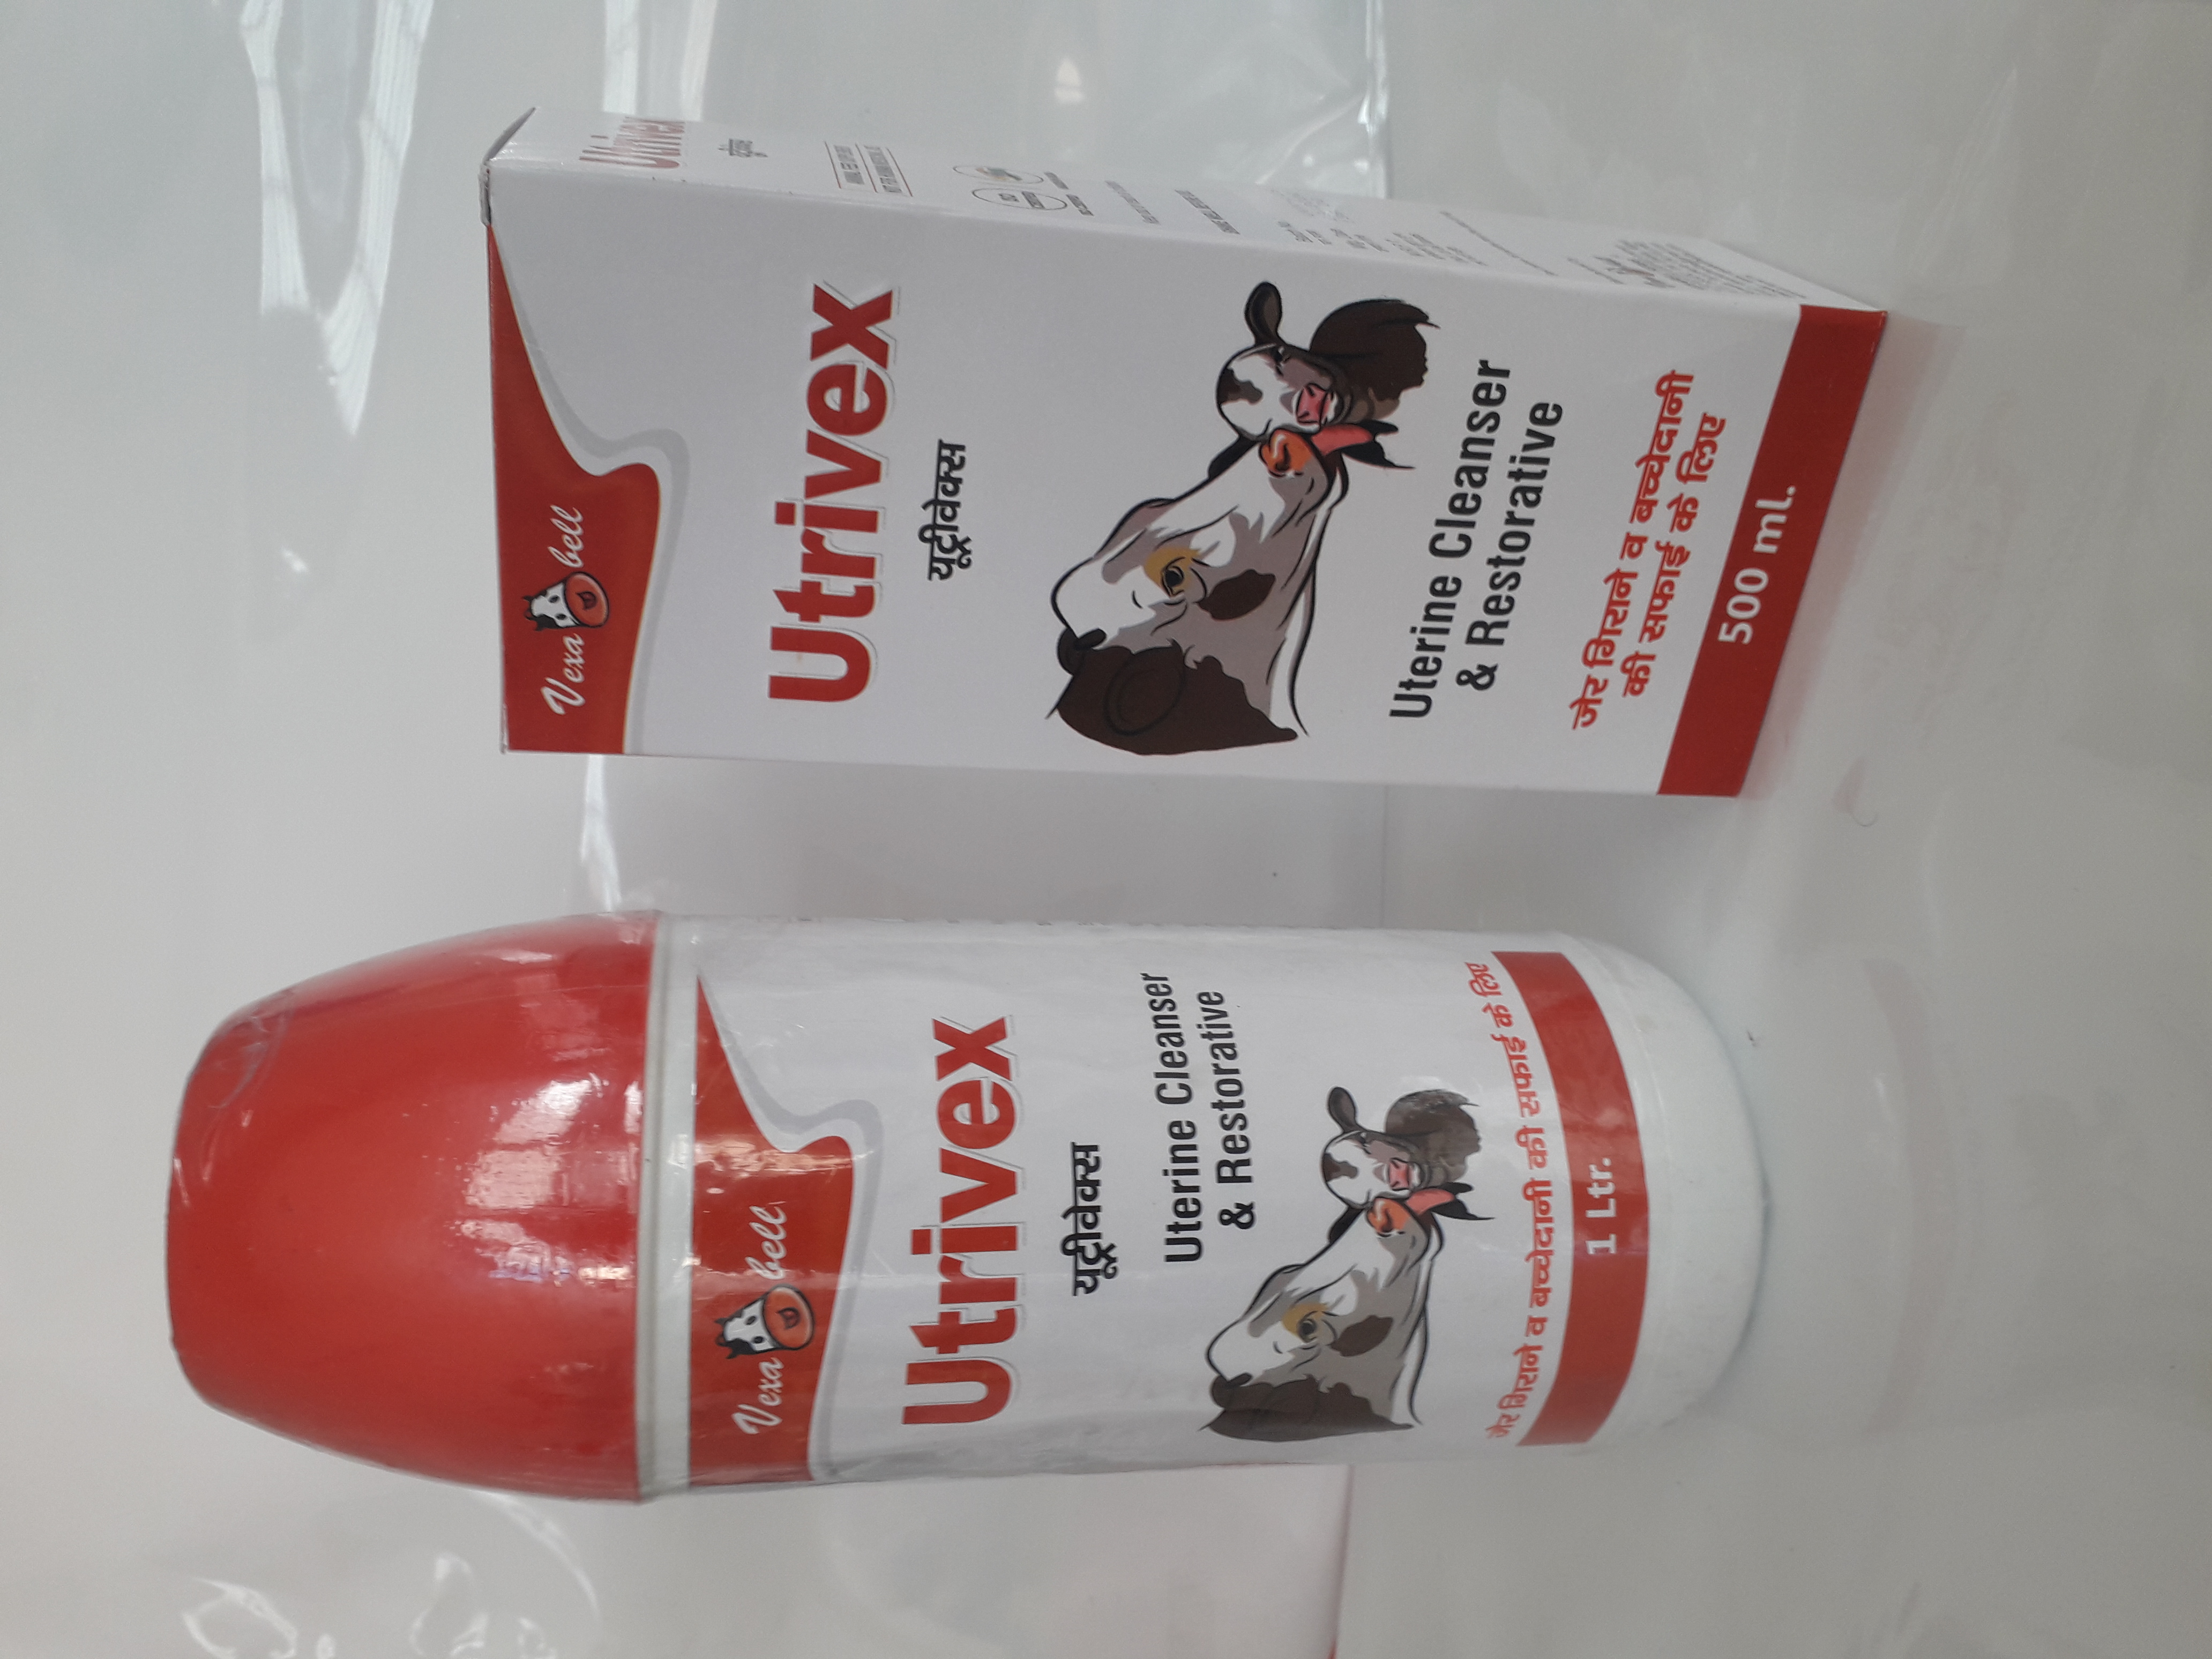 Utrivex 500ML (Uterine Cleanser And Restorative)